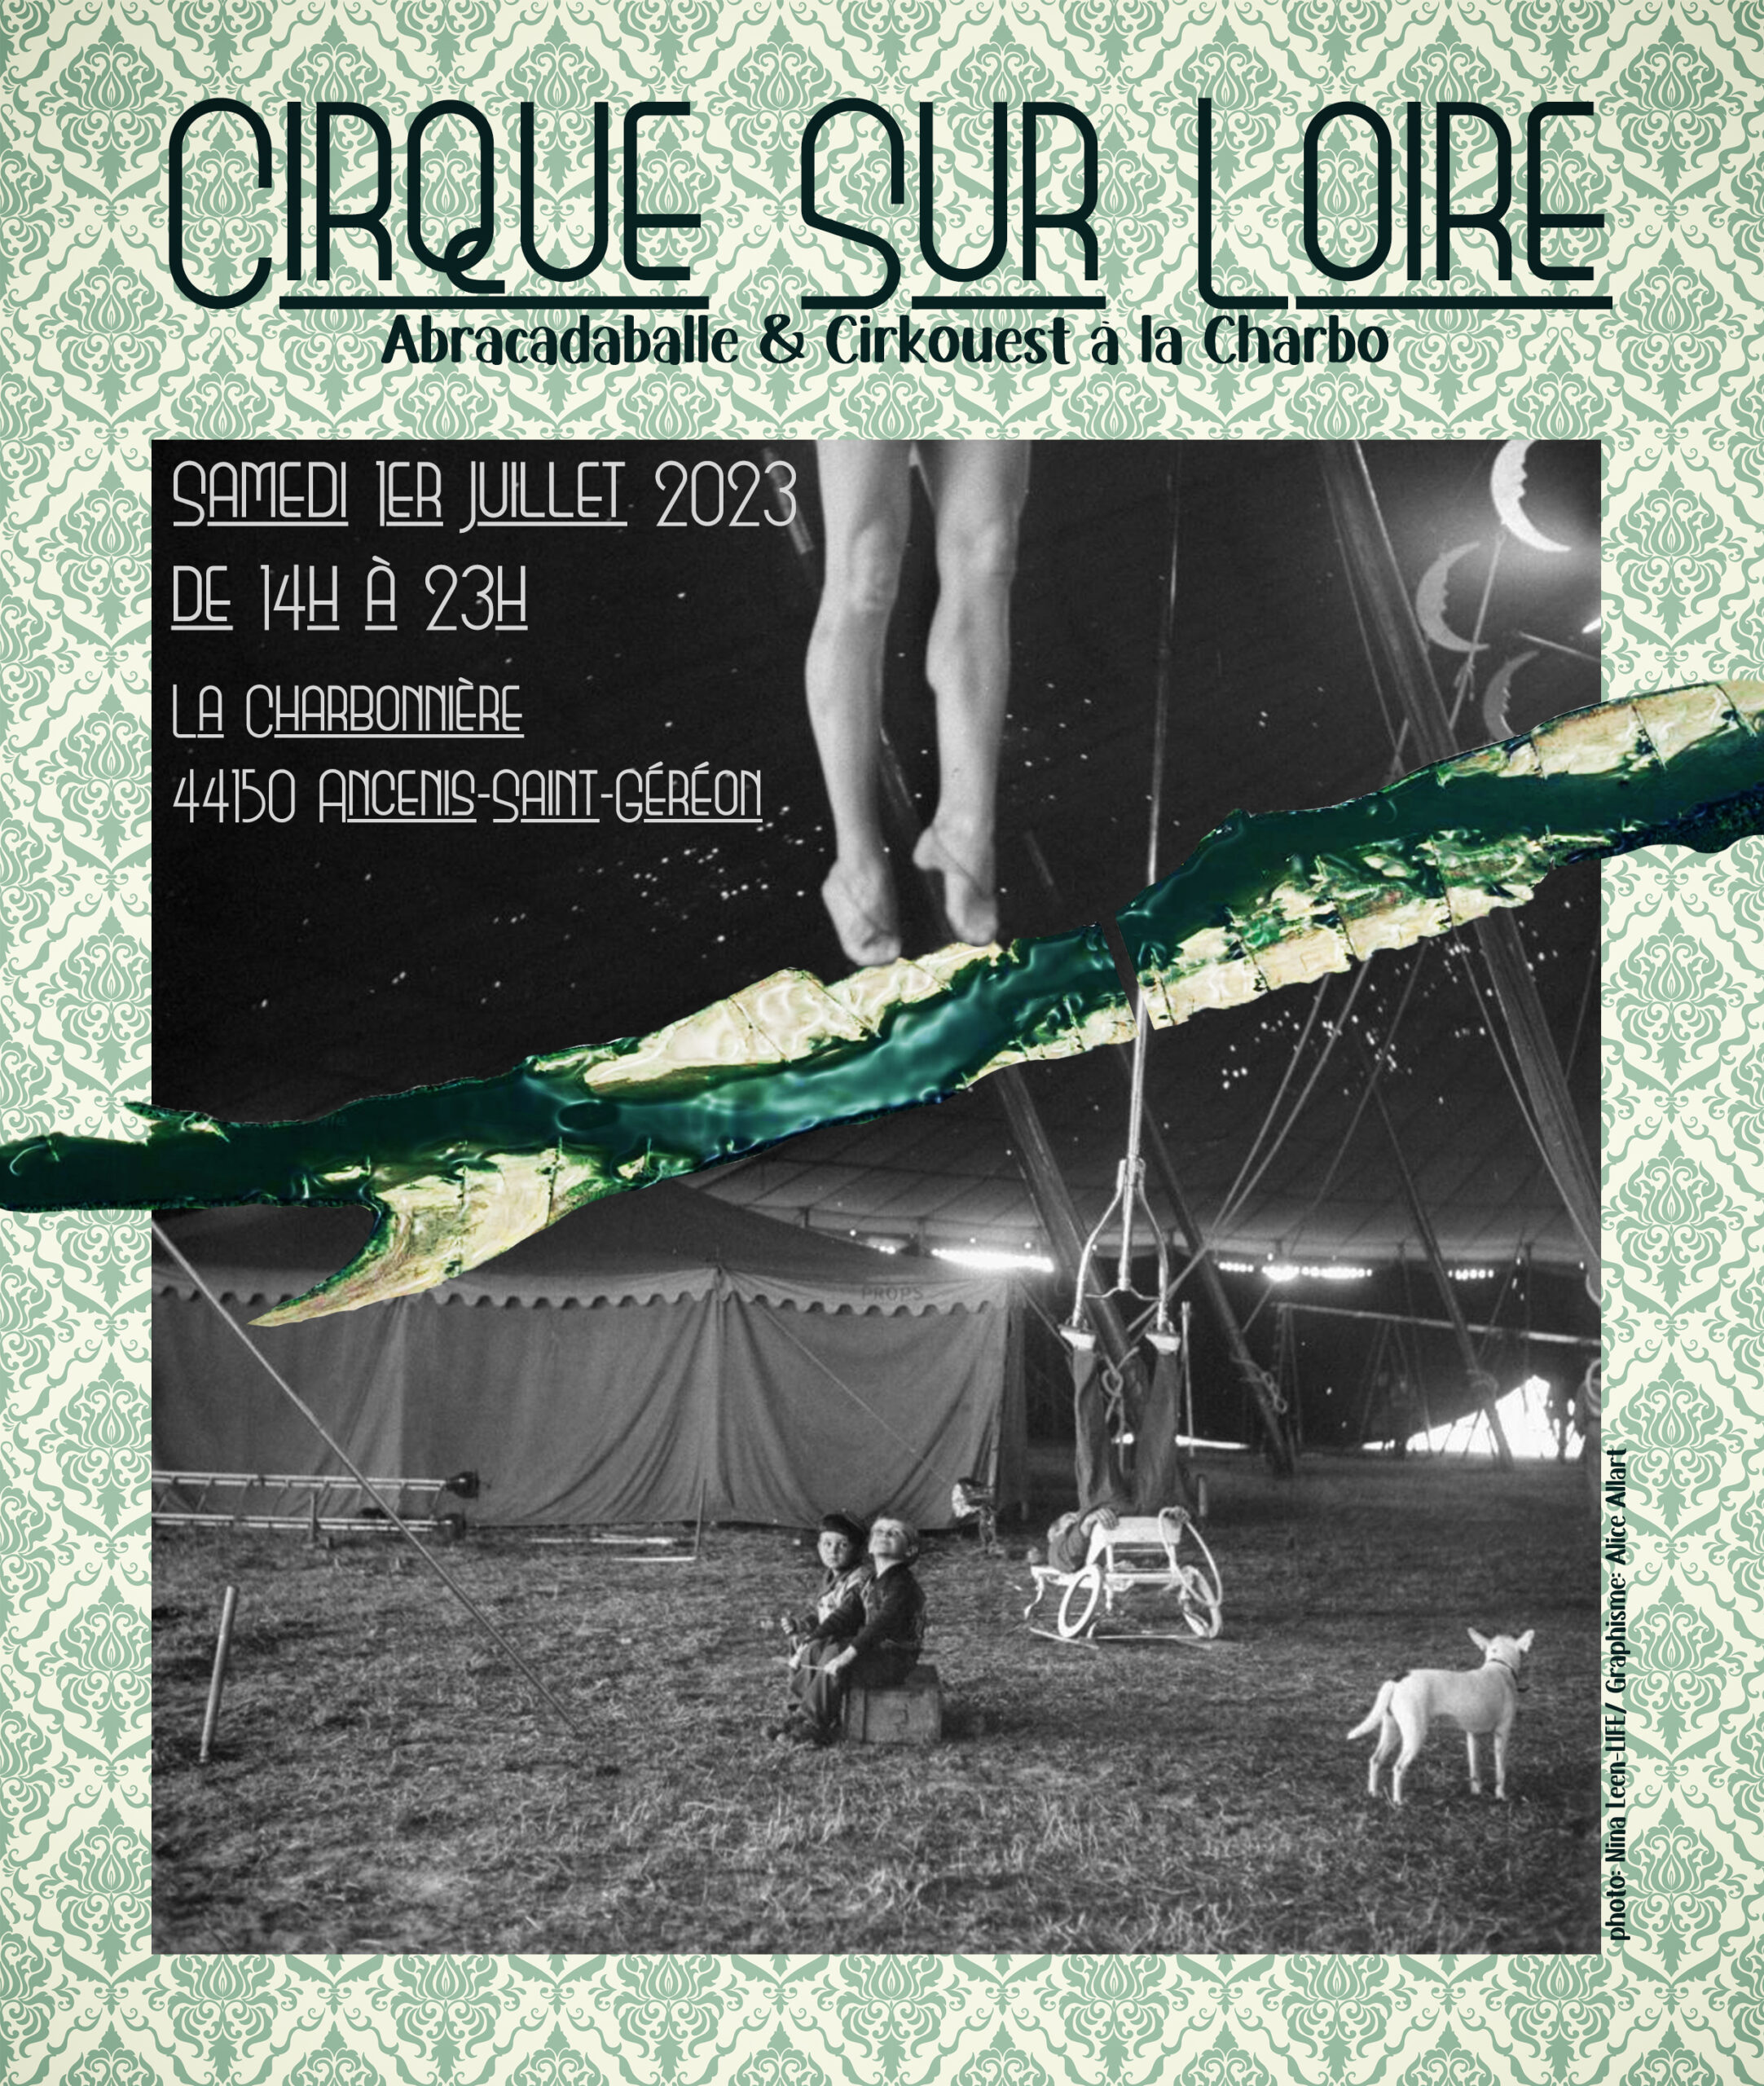 Cirque sur Loire